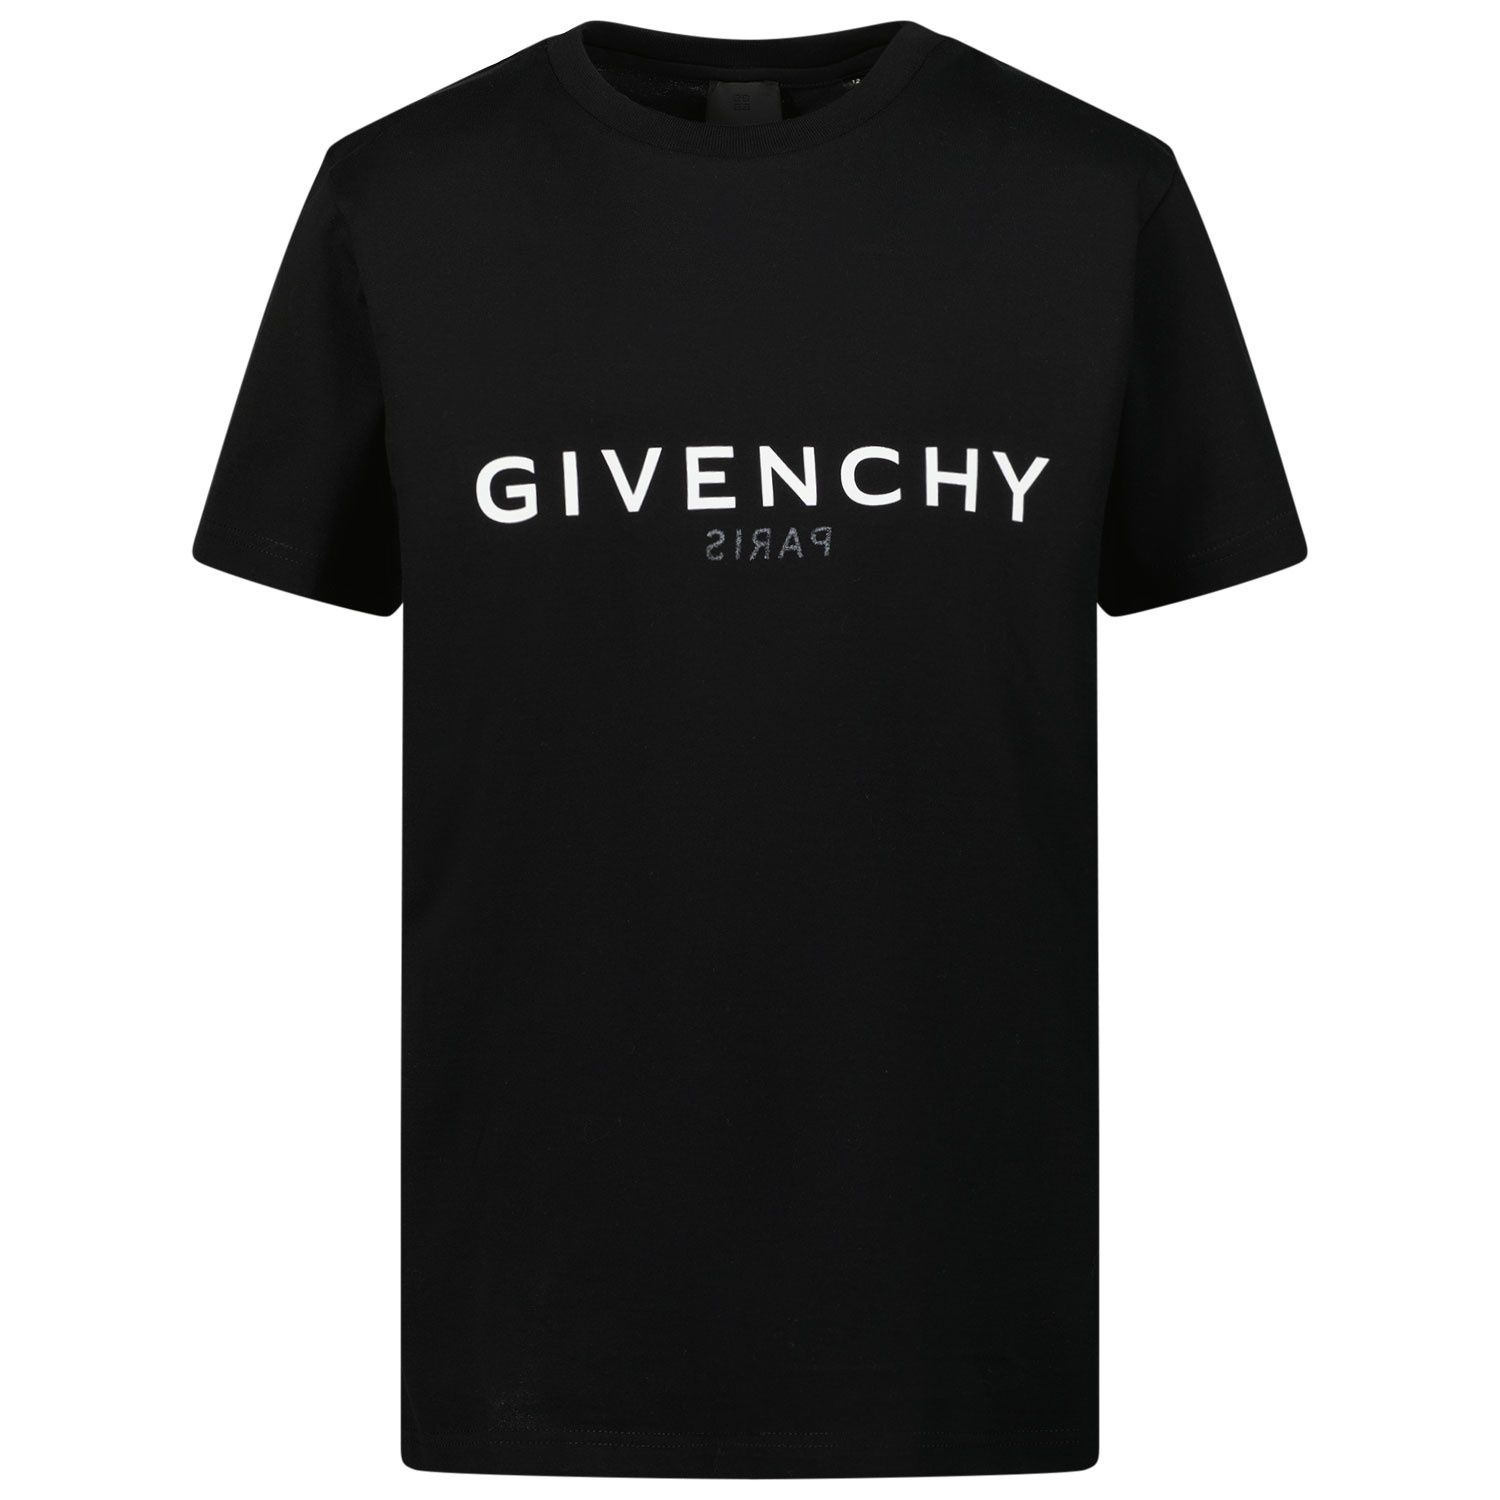 Afbeelding van Givenchy H25324 kinder t-shirt zwart